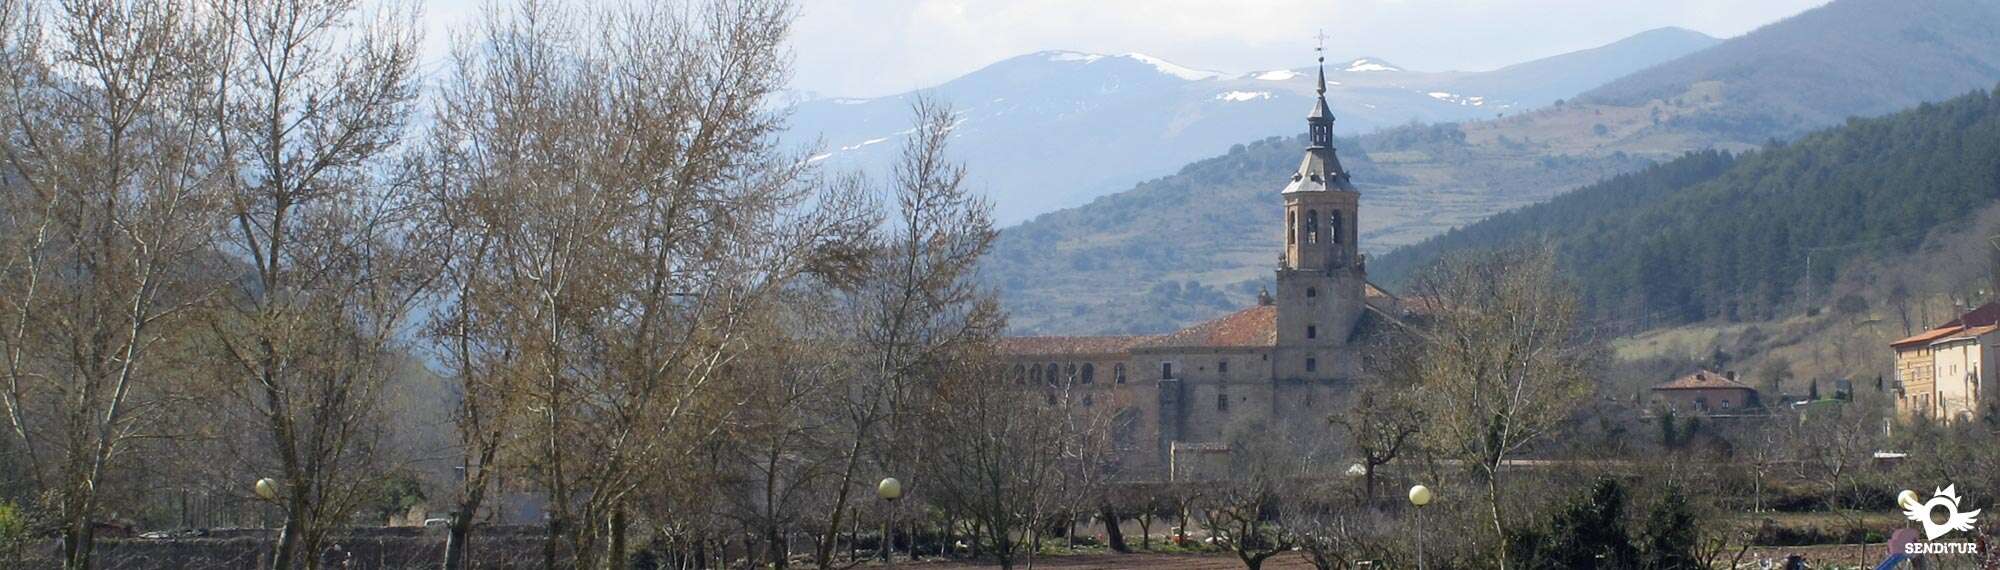 Monastery of Yuso